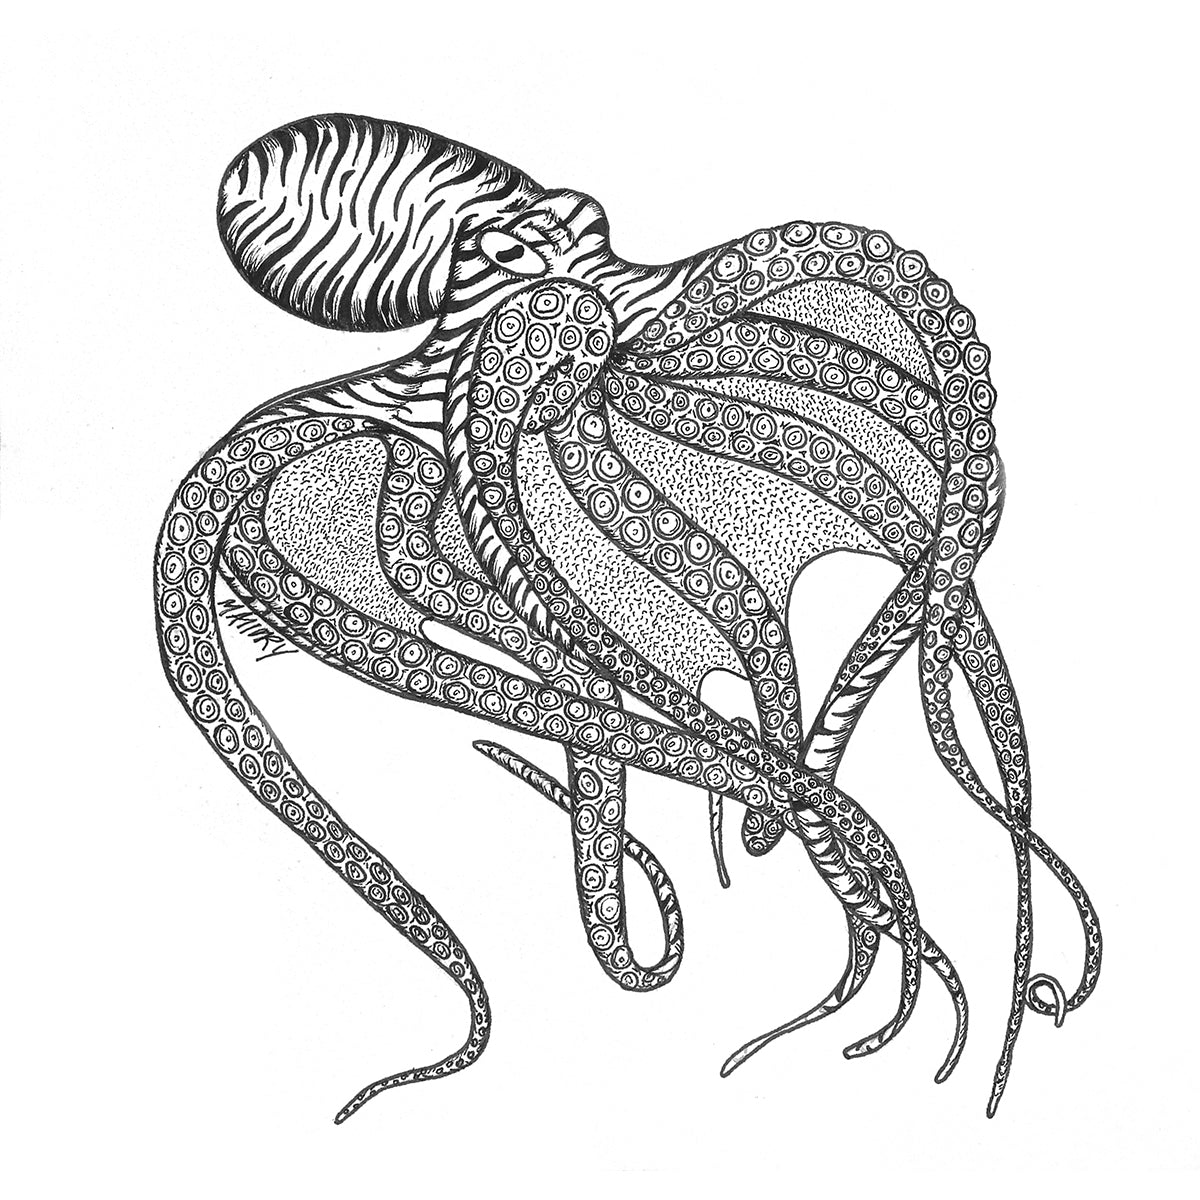 Octopus Illustration 8x10